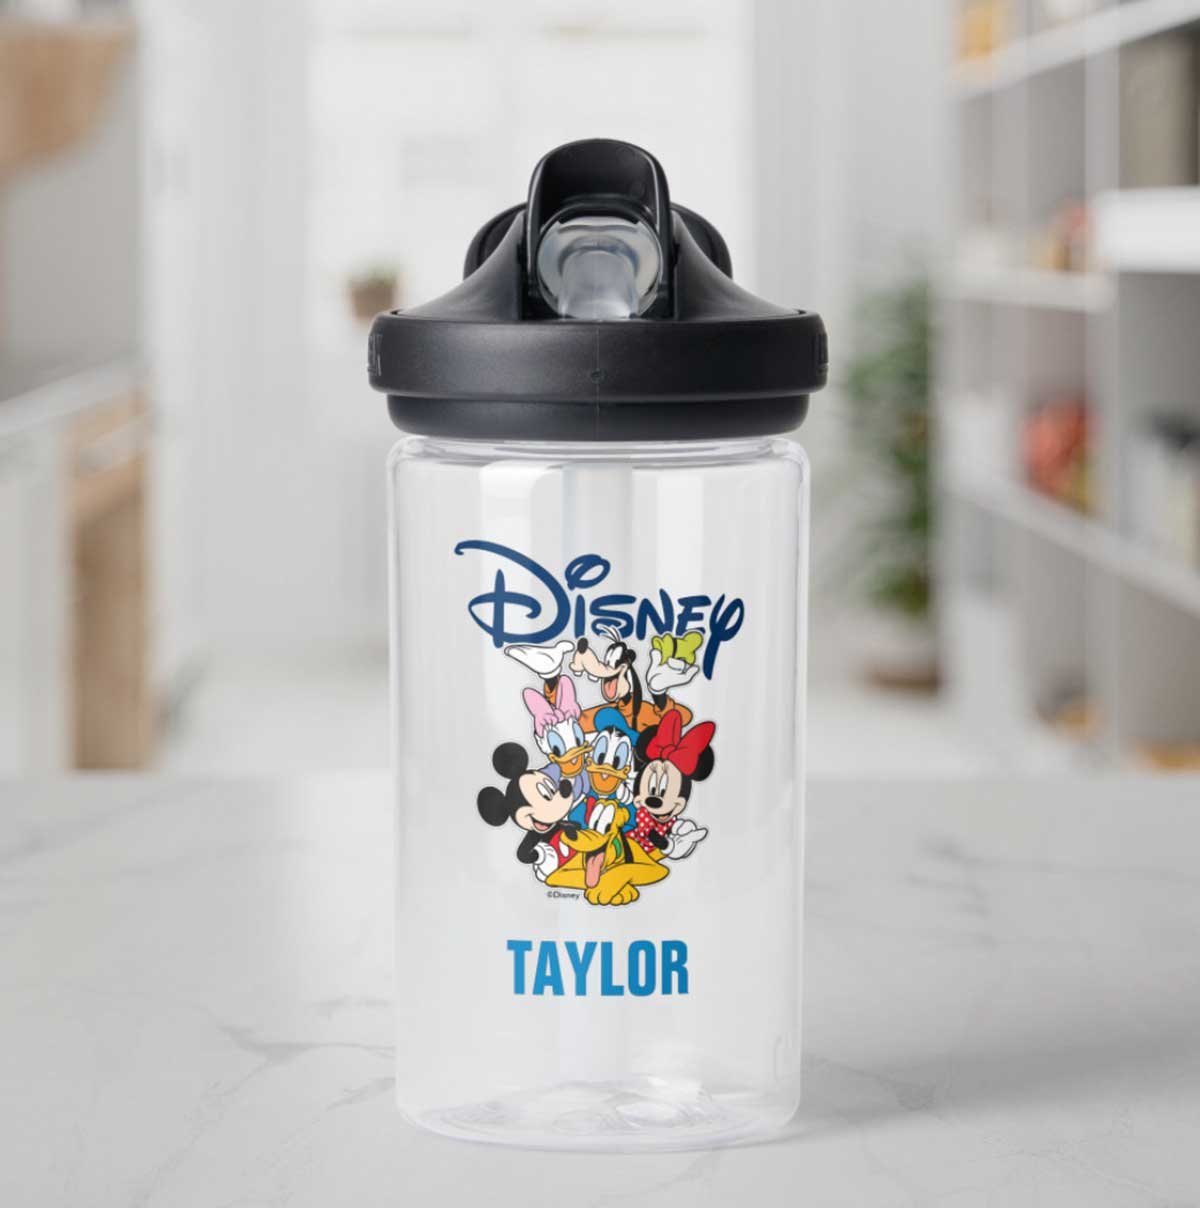 Disney custom water bottle